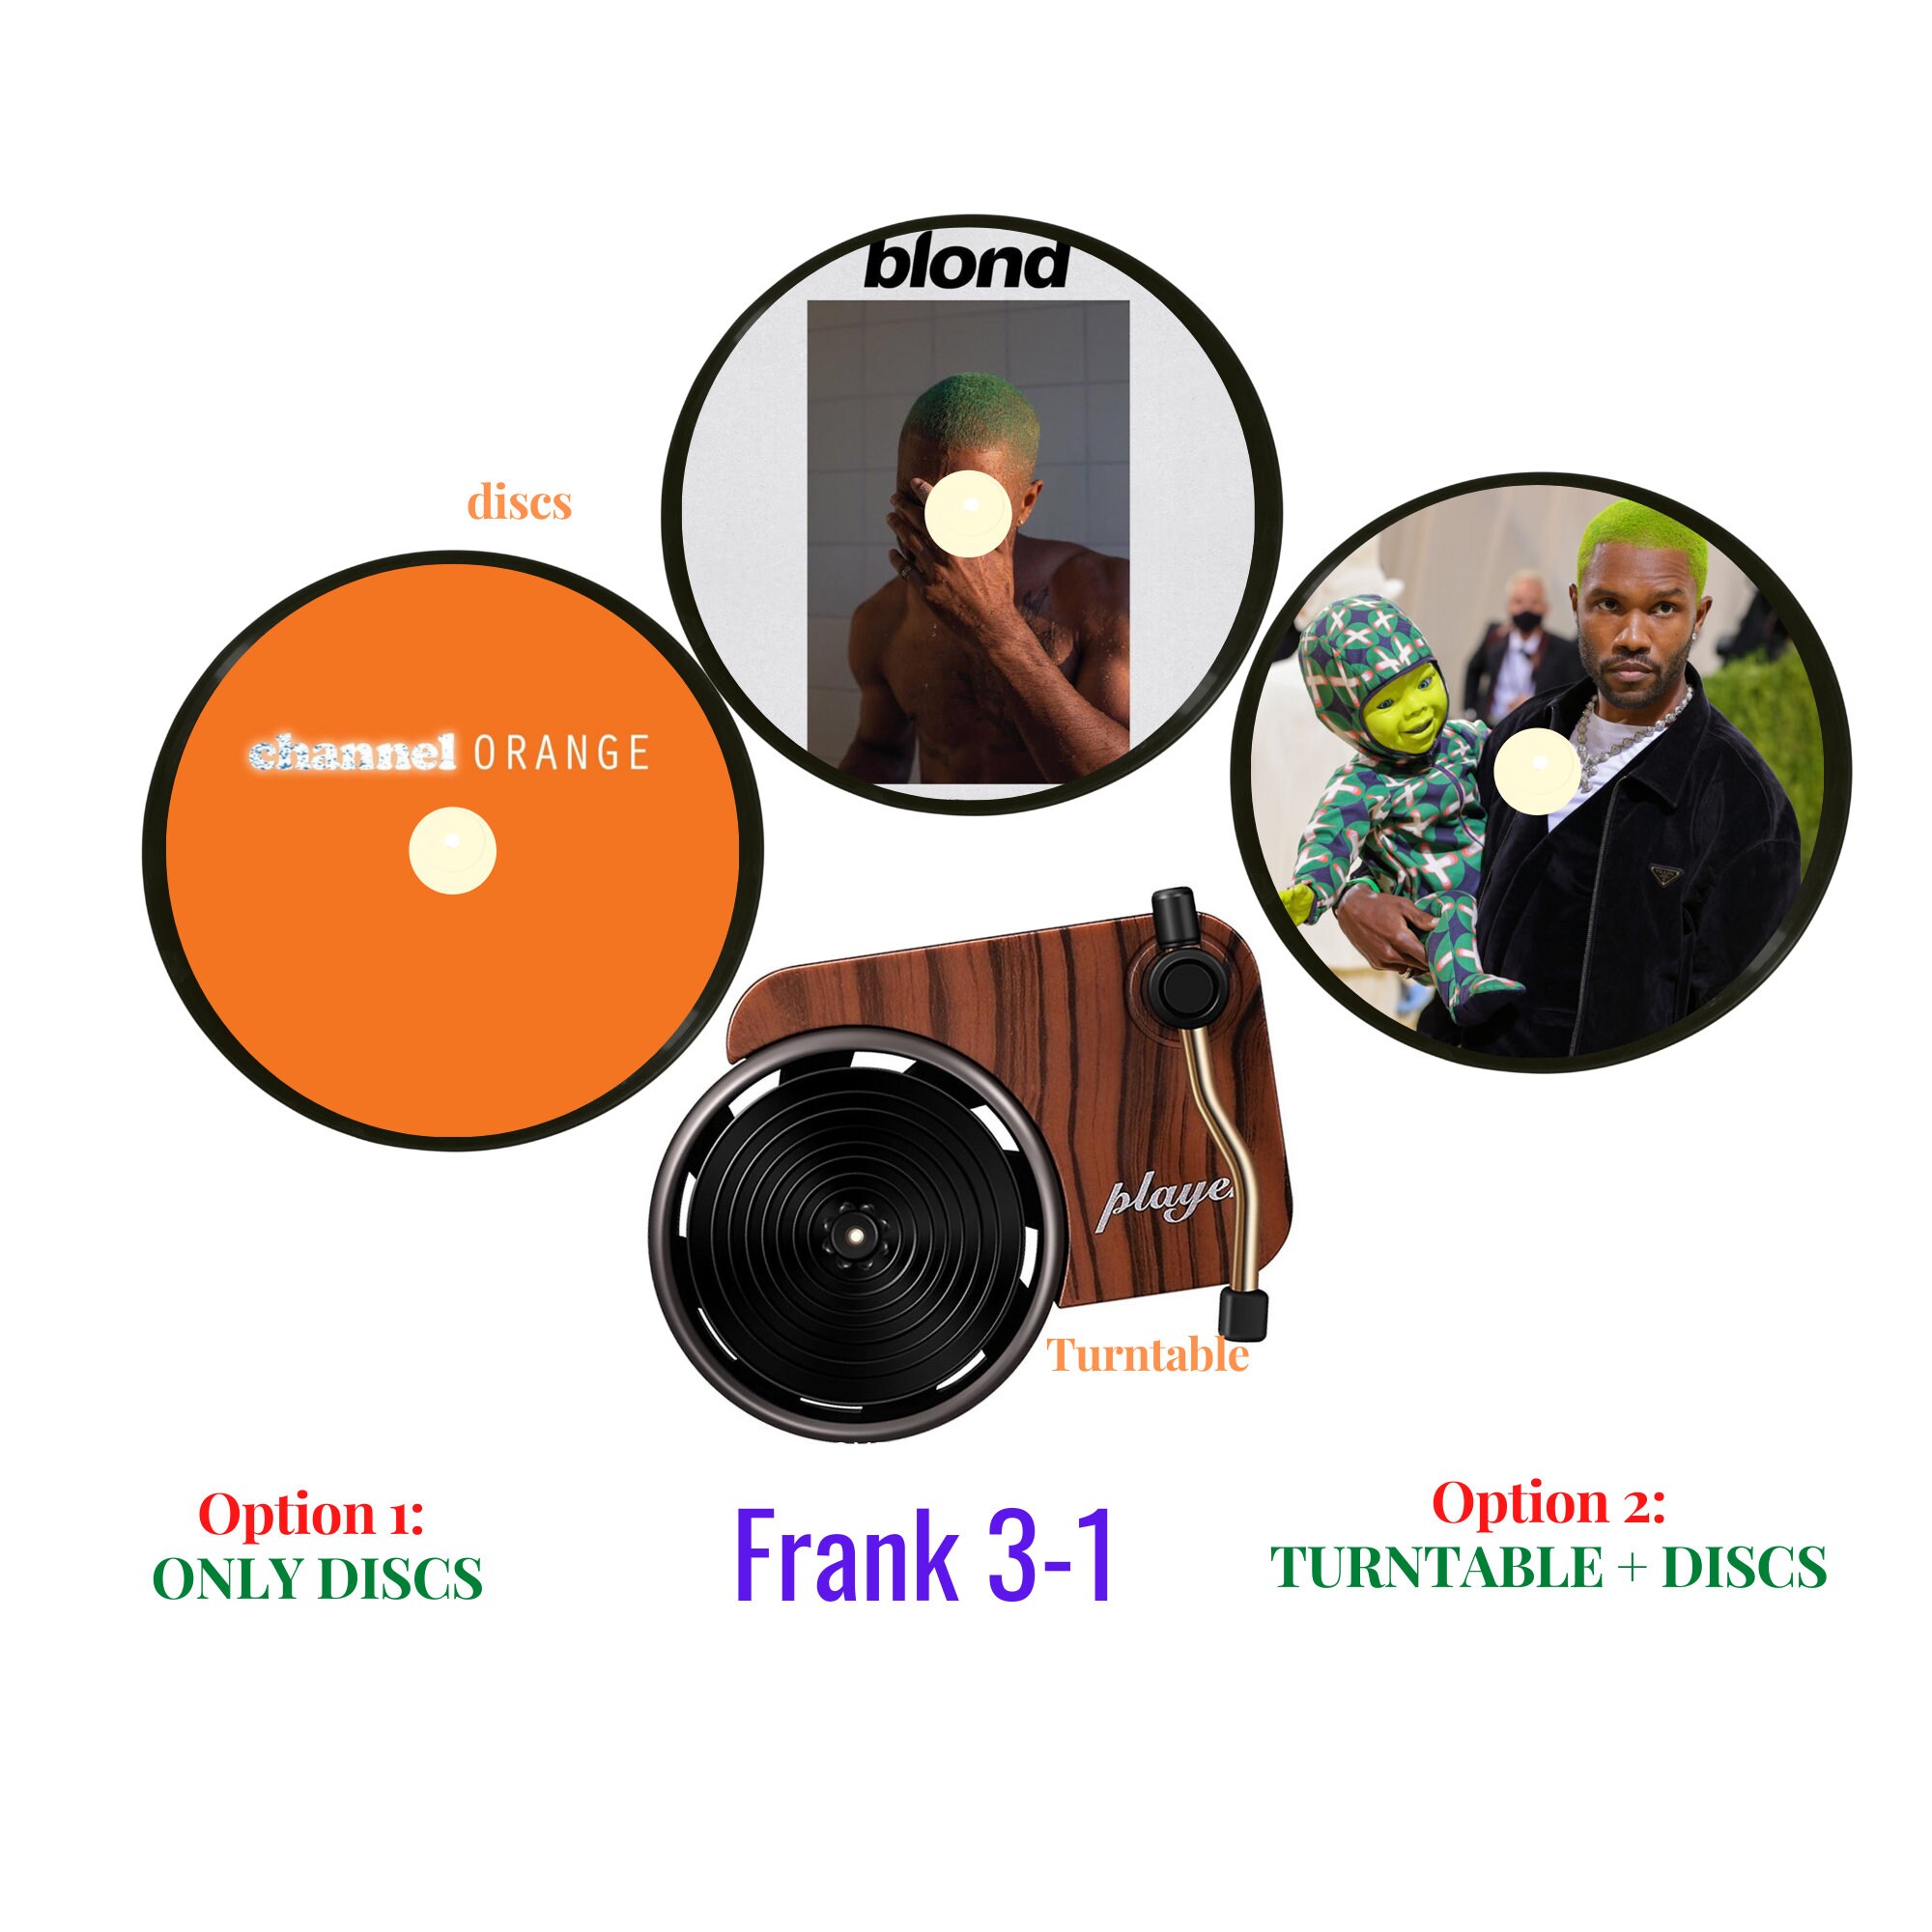 Frank Ocean Inspired Air Freshener Car Accessories Musician Singer